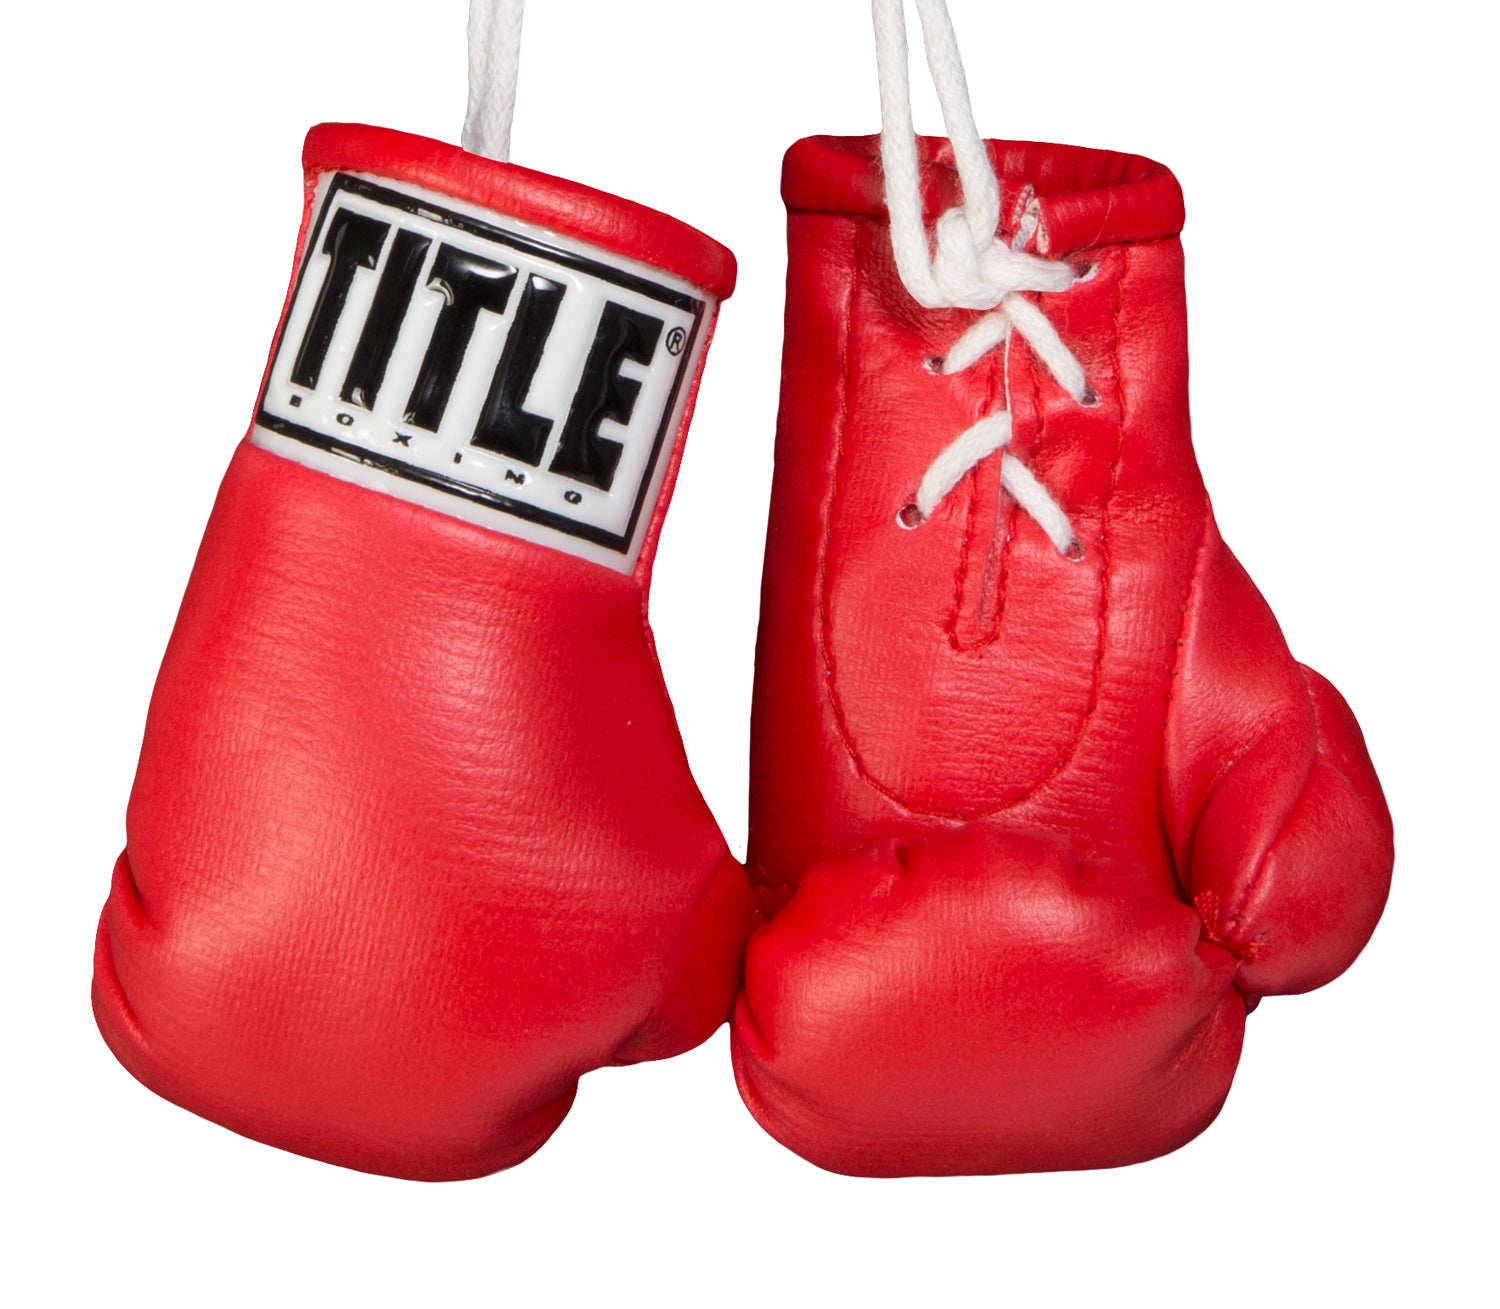 3-Piece Monogram Boxing Glove Set